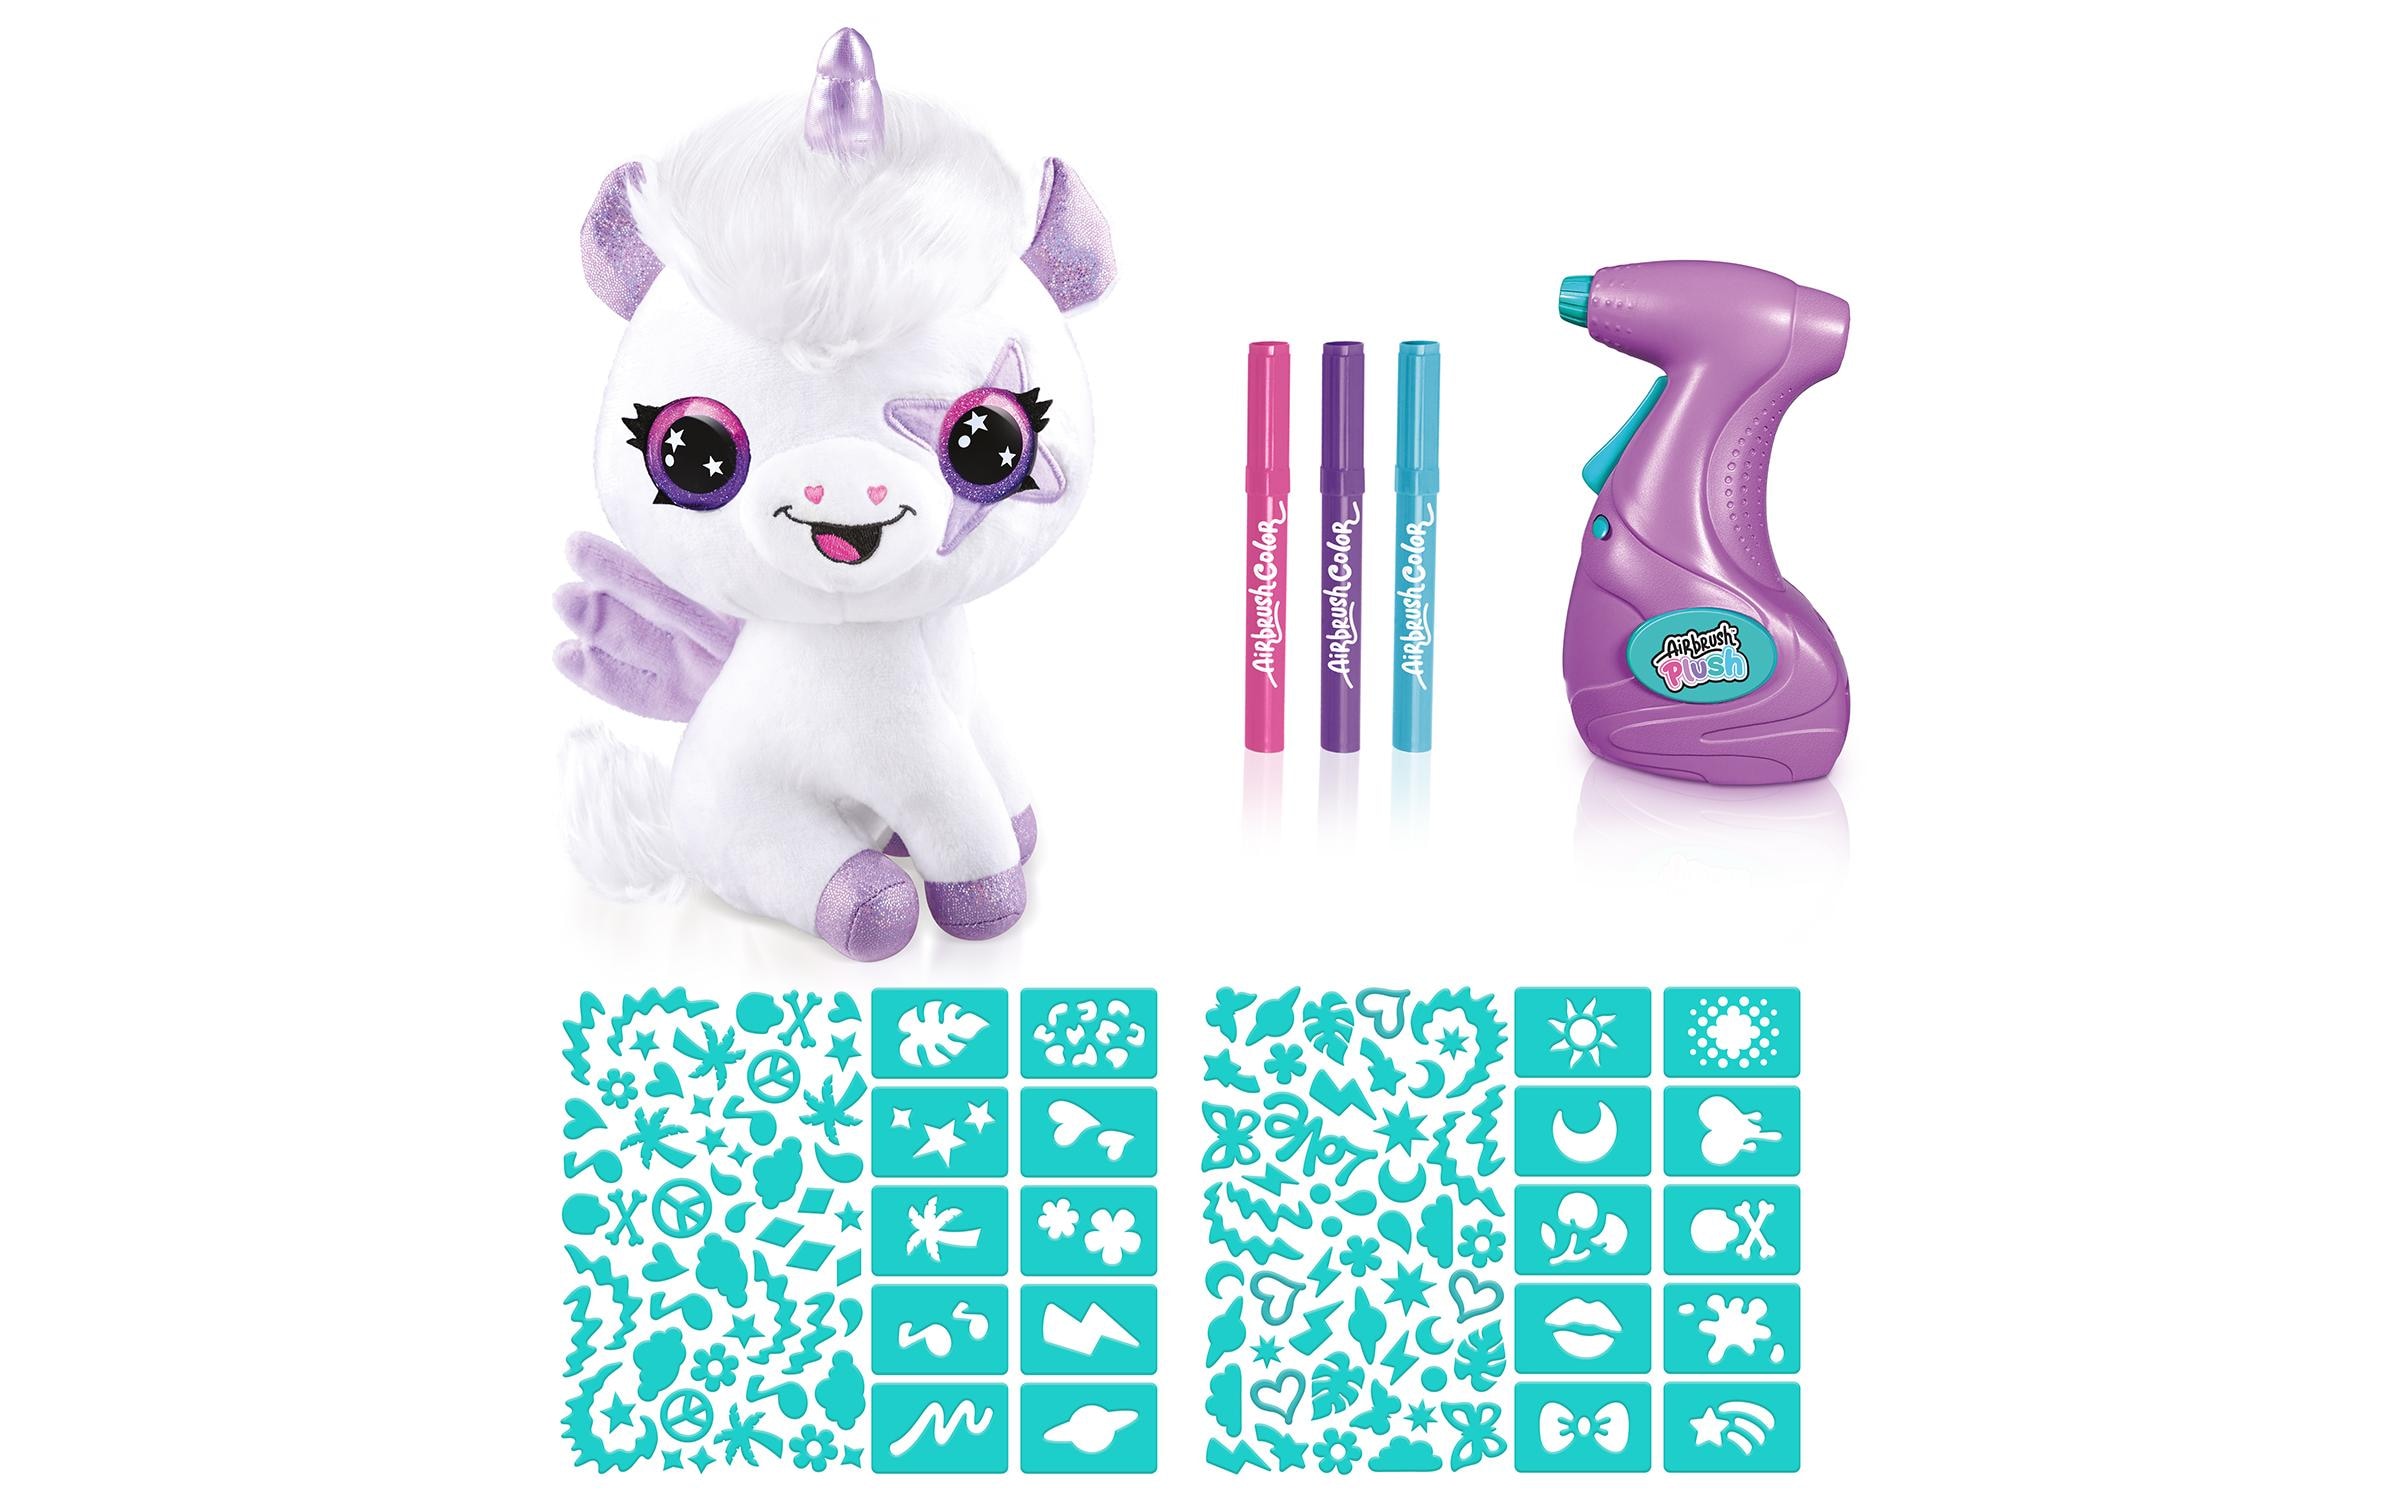 Canal Toys Airbrush Plush Unicorn 